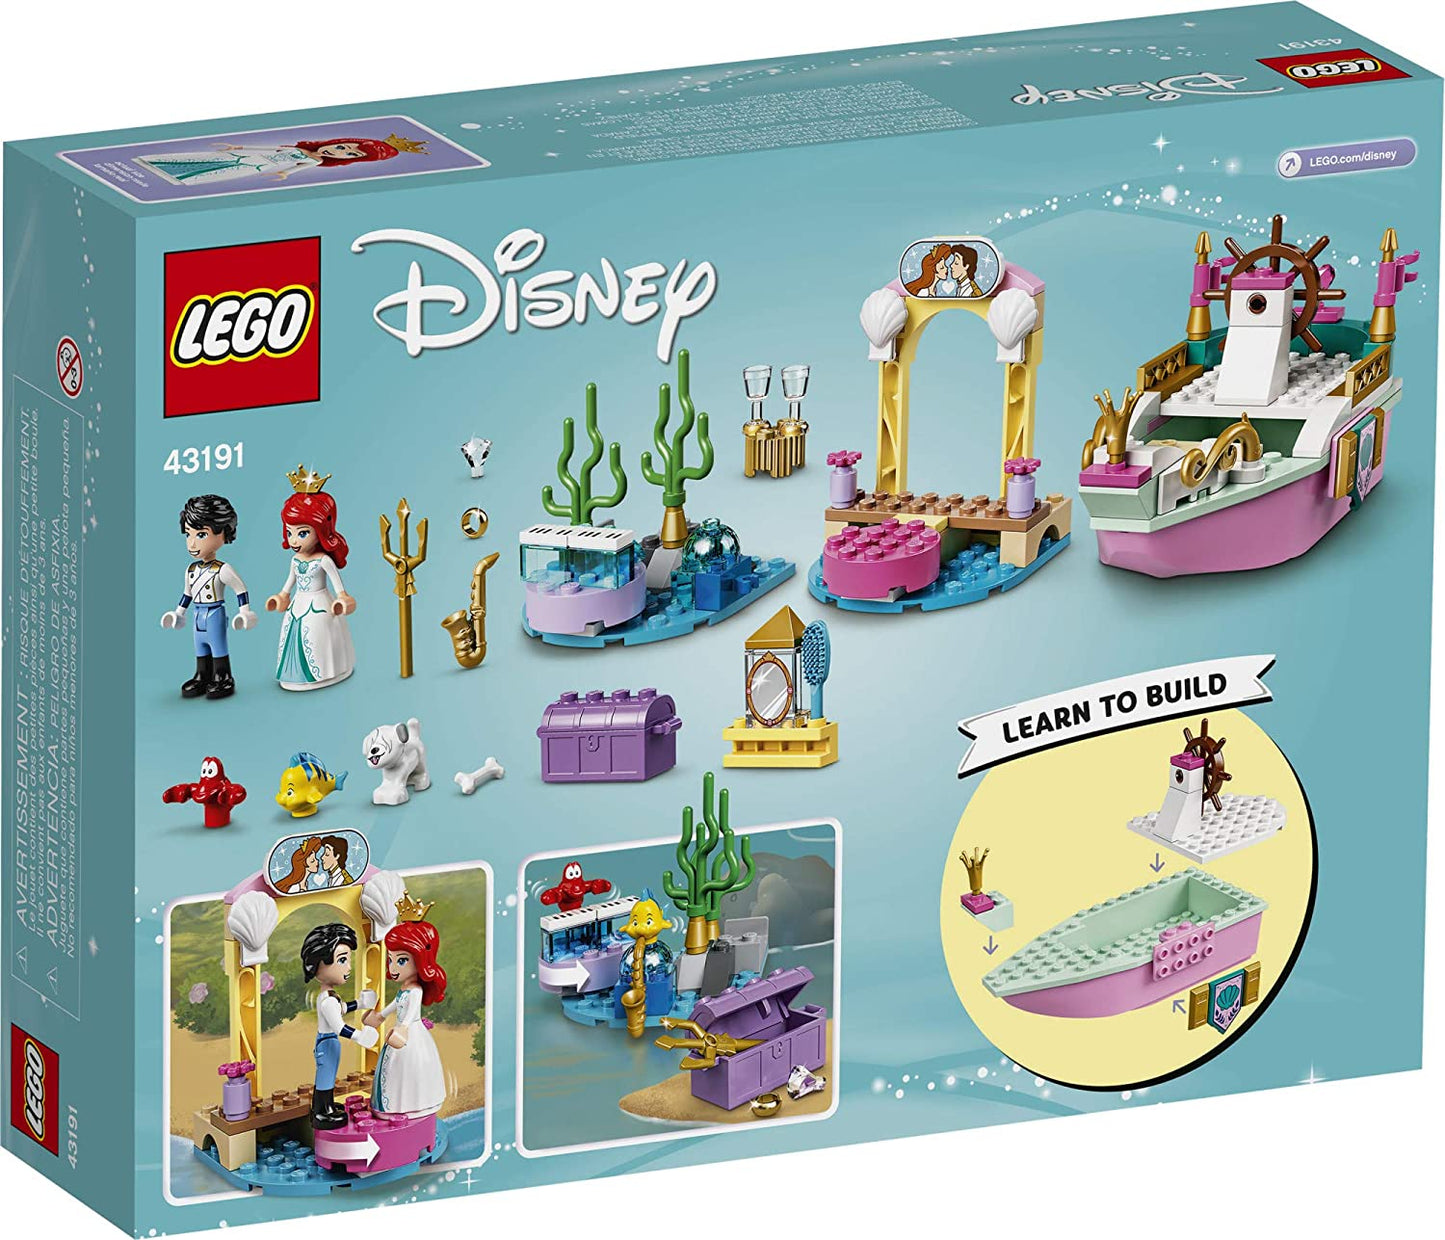 LEGO Disney - 43191 ARIELS CELEBRATION BOAT